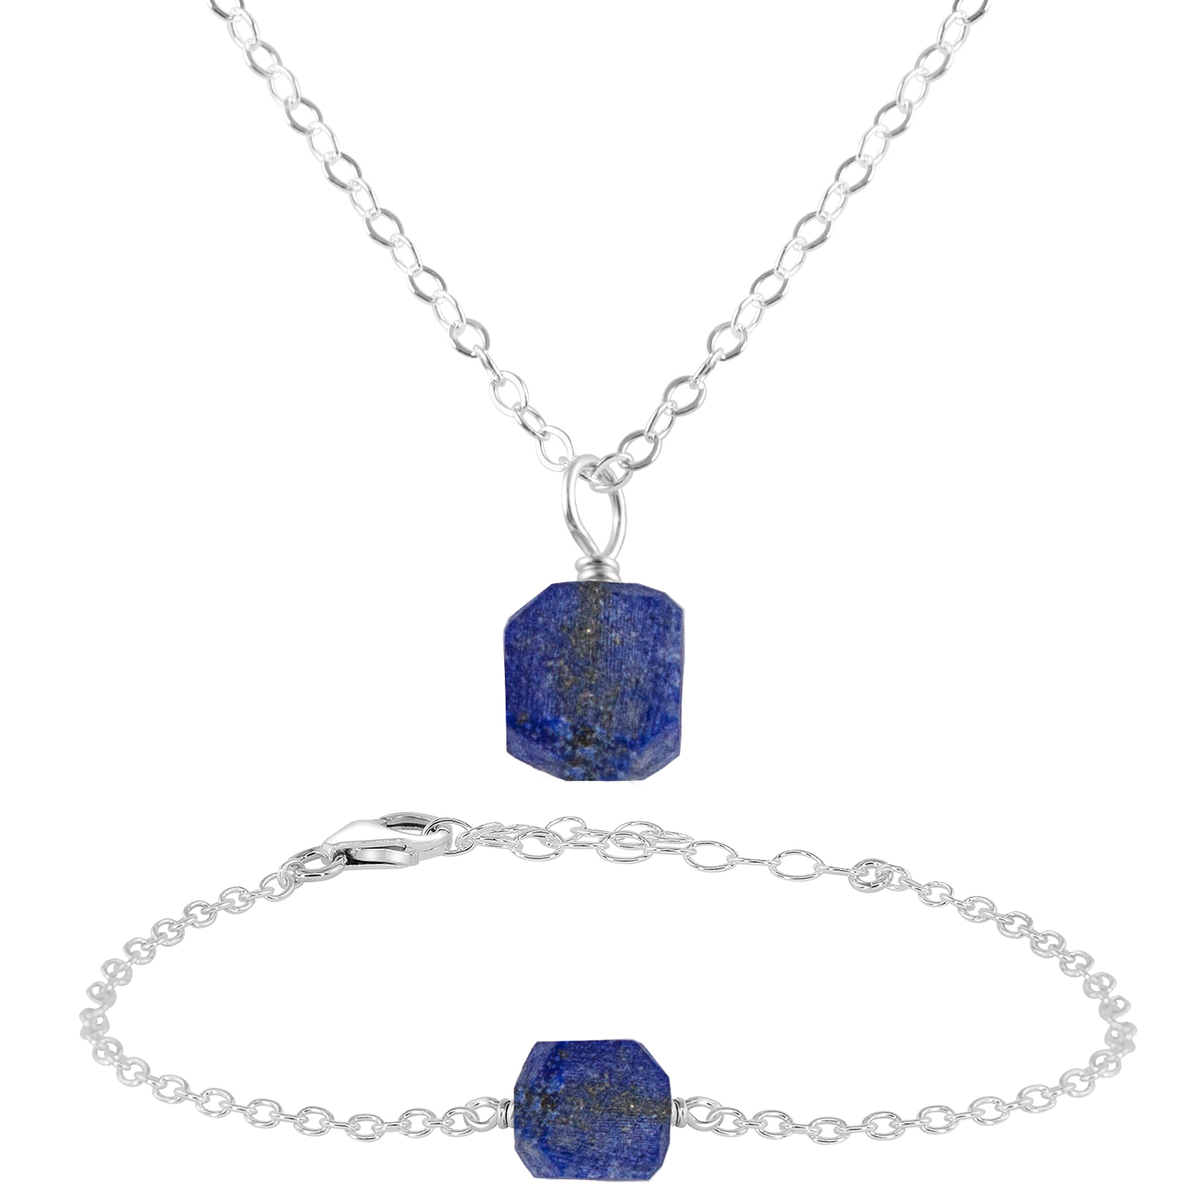 Raw Lapis Lazuli Crystal Jewellery Set - Raw Lapis Lazuli Crystal Jewellery Set - Sterling Silver / Cable / Necklace & Bracelet - Luna Tide Handmade Crystal Jewellery